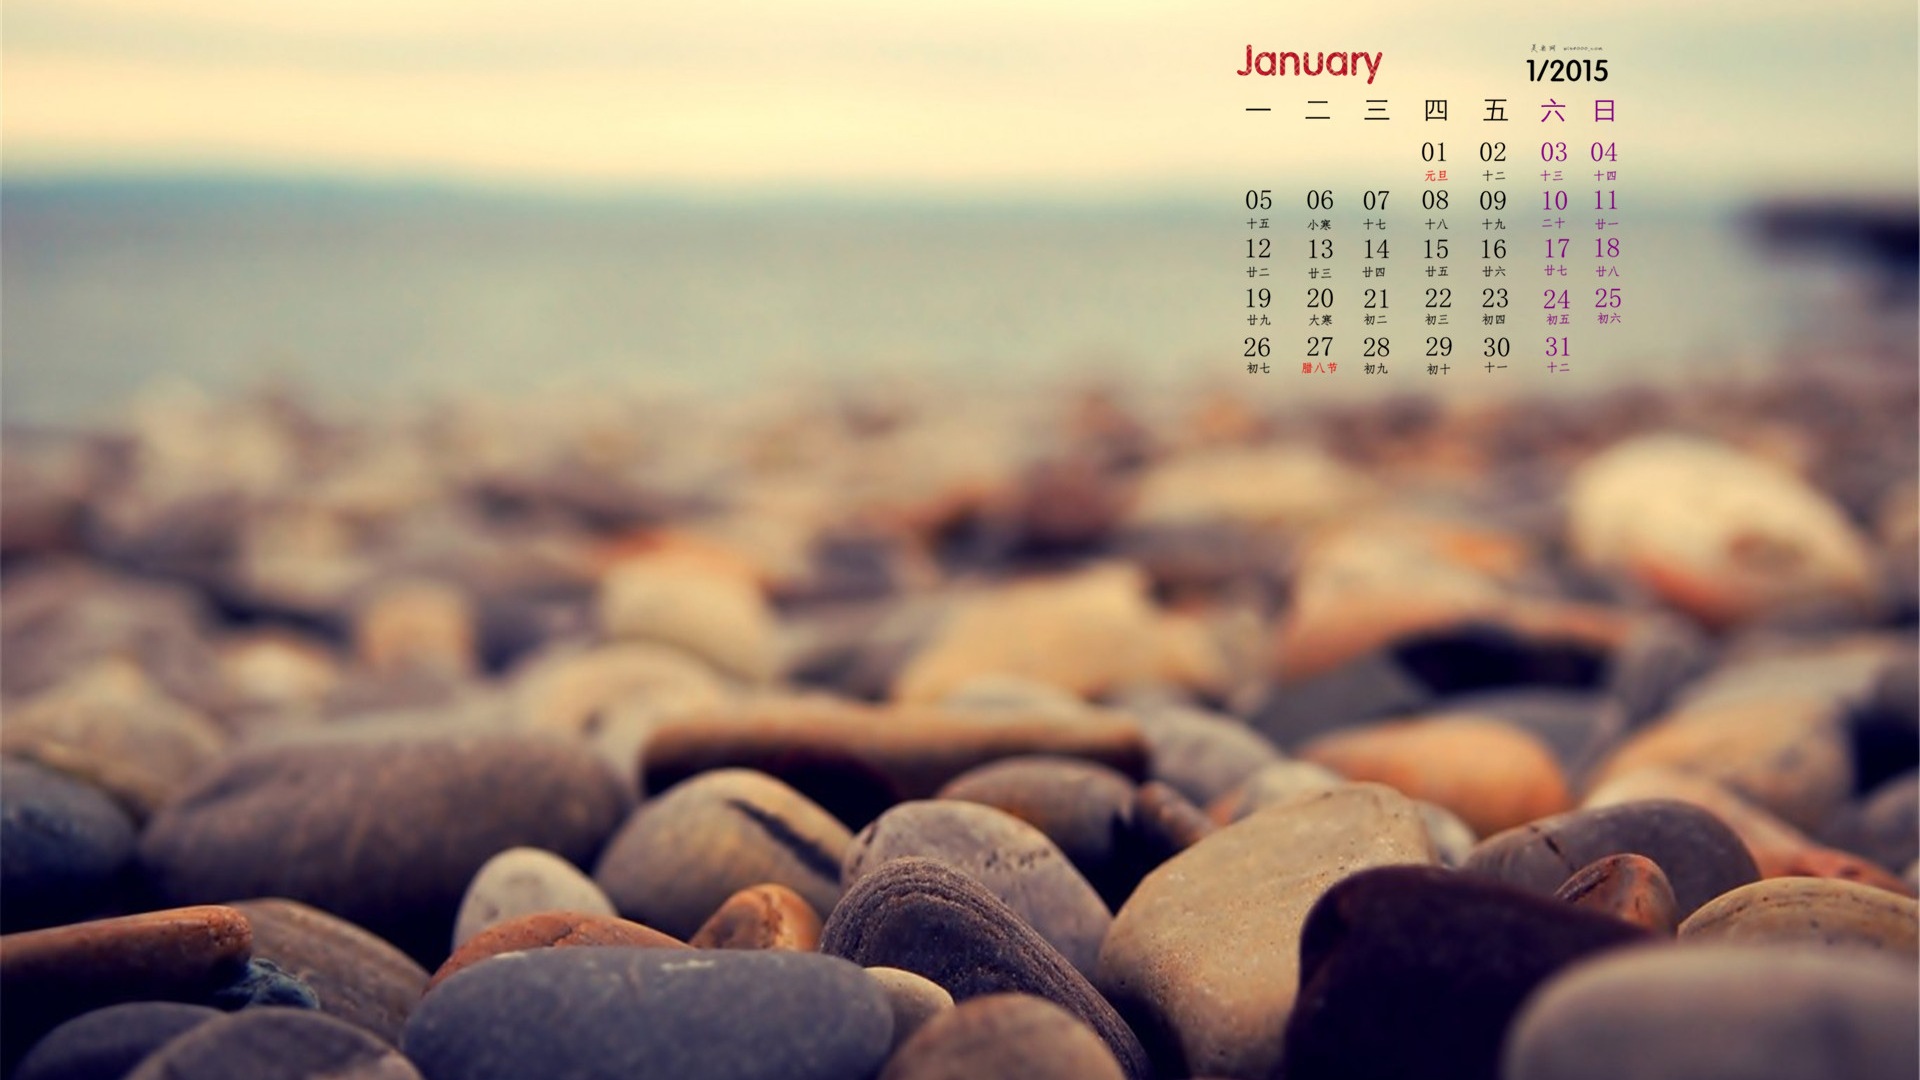 January 2015 calendar wallpaper (1) #11 - 1920x1080